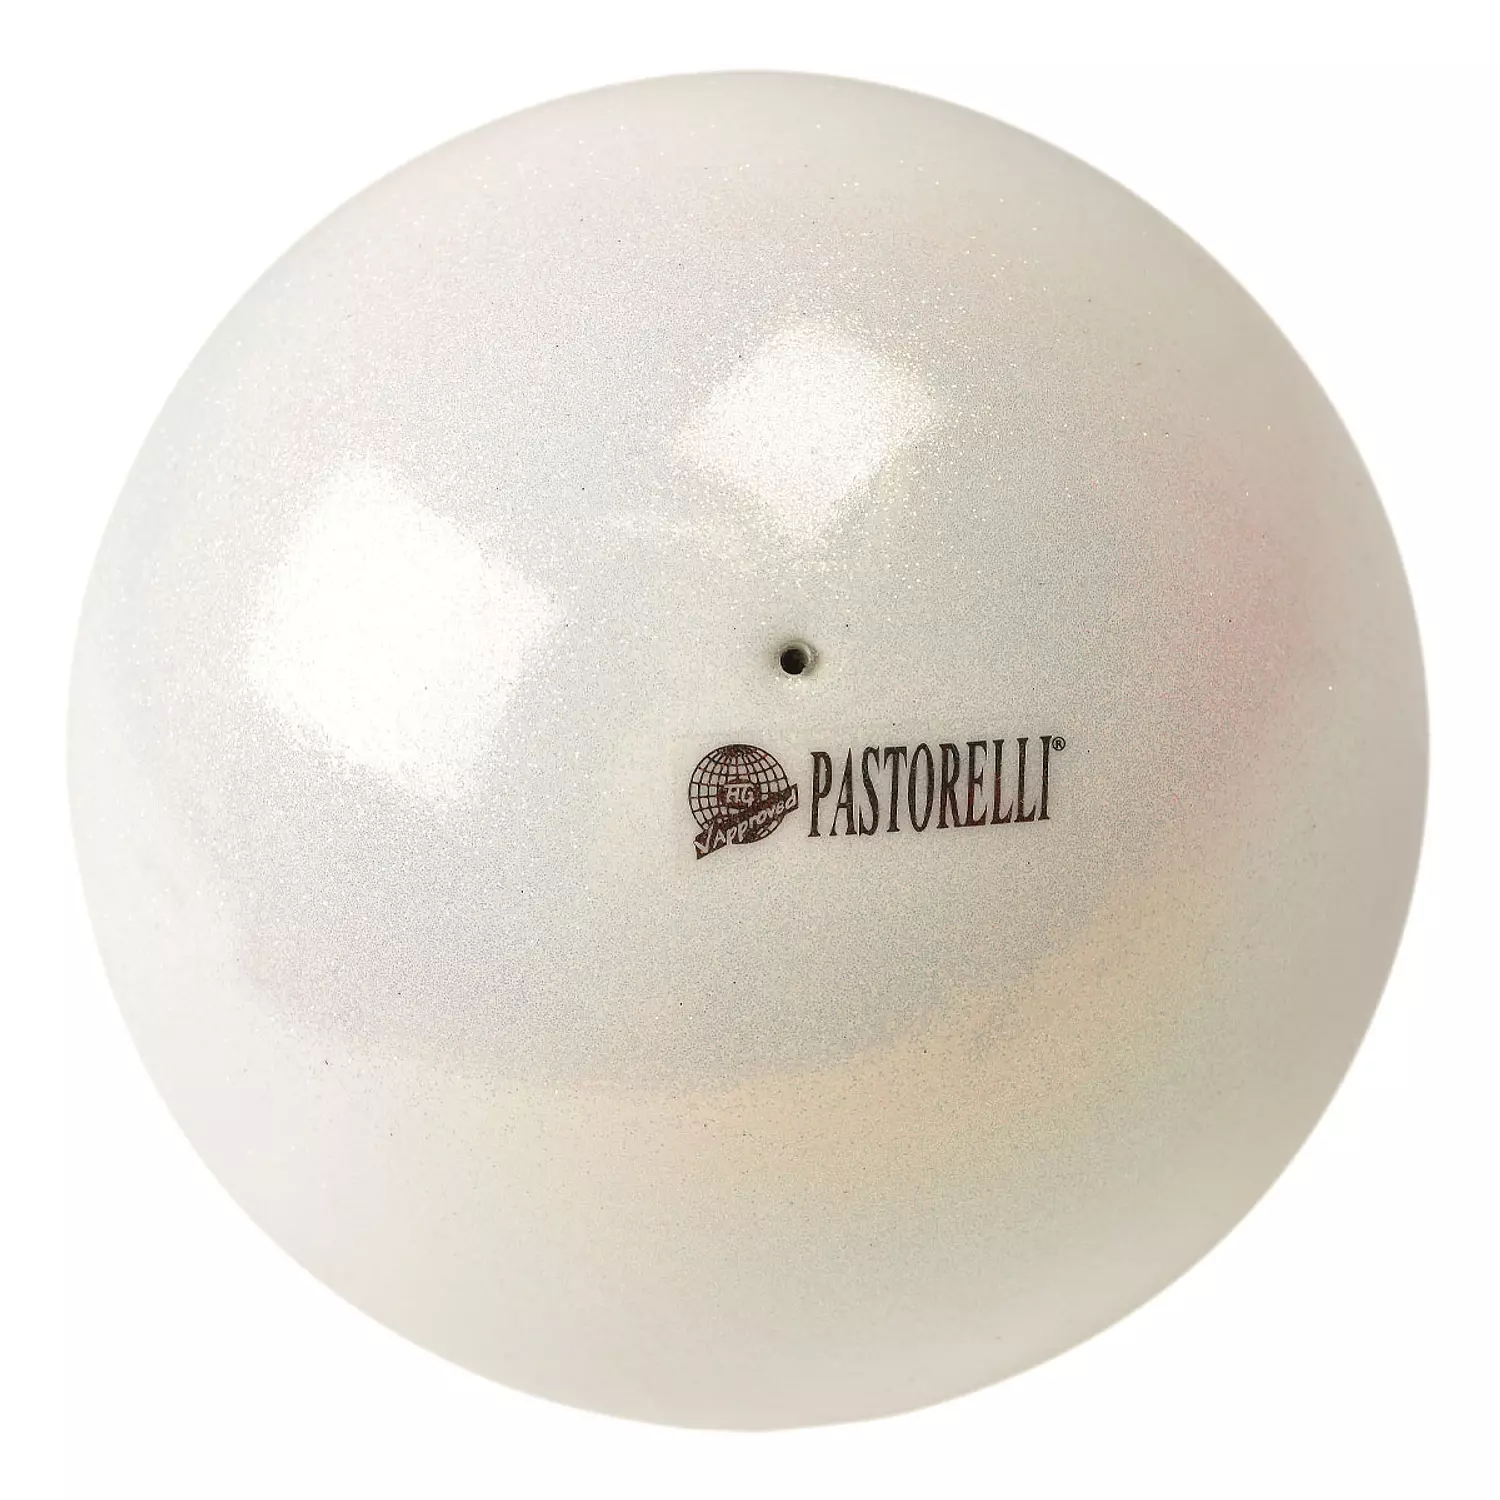 Pastorelli-High Vision Ball | 18cm FIG 0